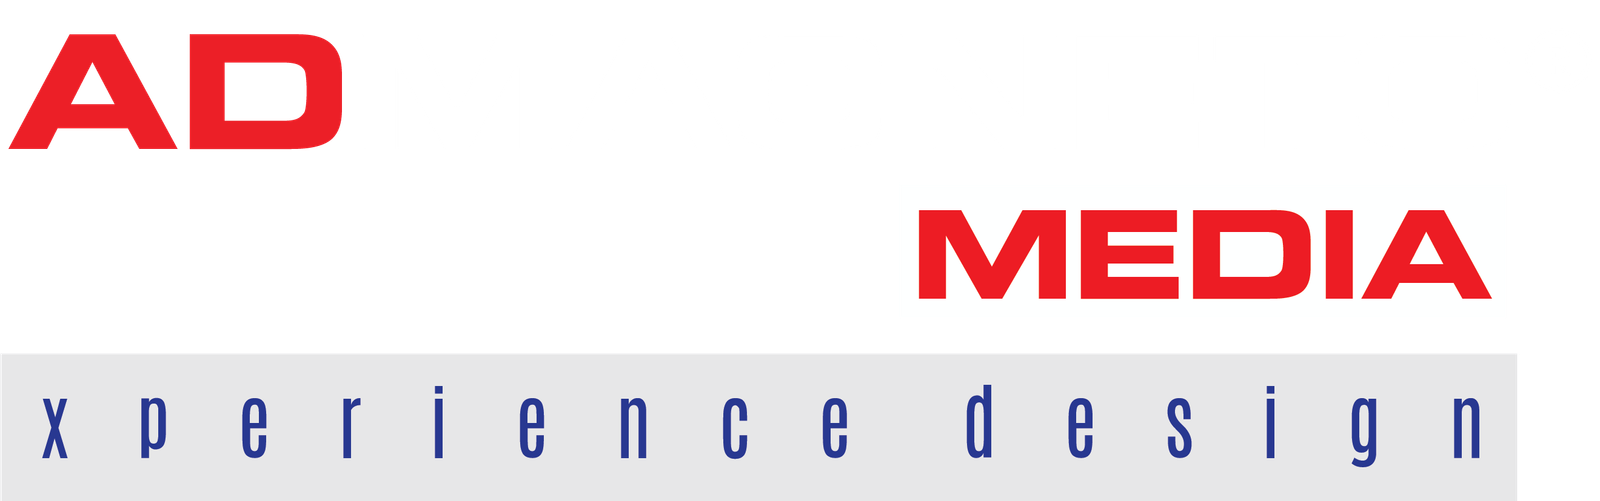 Admegneto Media Logo